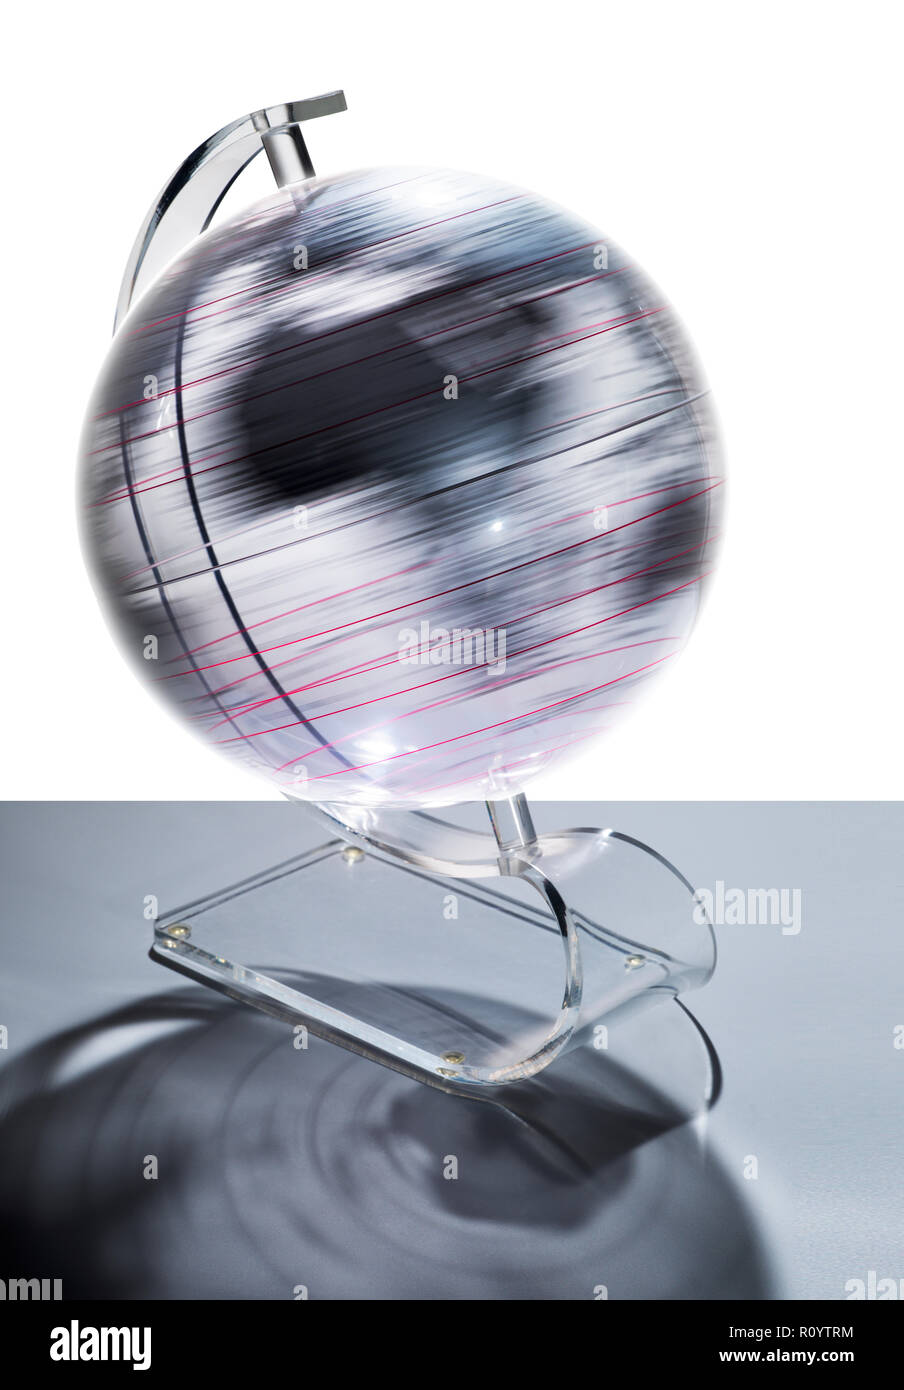 Globo transparente girando a velocidad, Foto de estudio Foto de stock